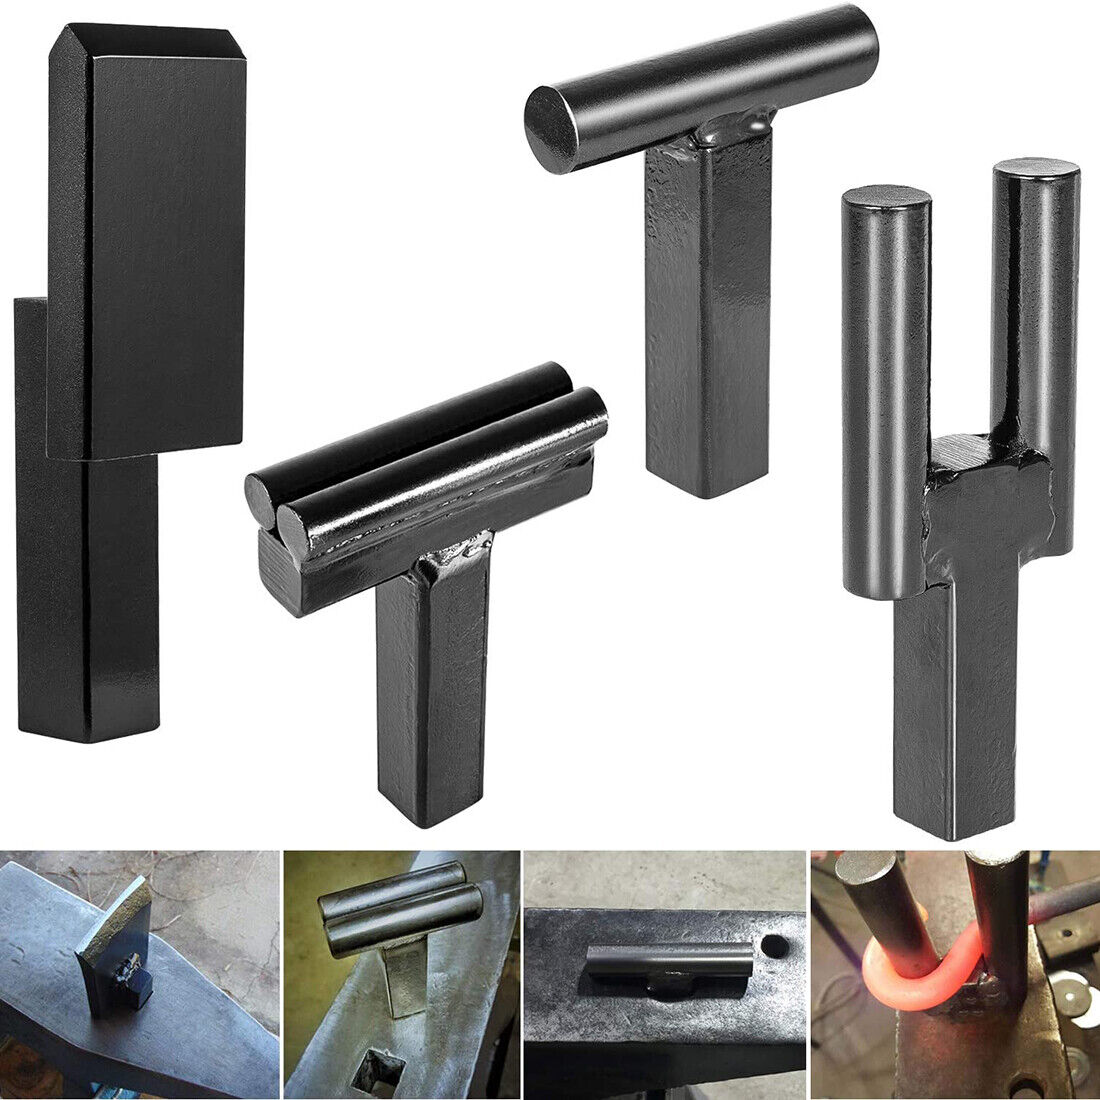 1 Inch Blacksmith Anvil Hardy Tool Set – Hot Cut, Creasing Stake, Fuller, Fork